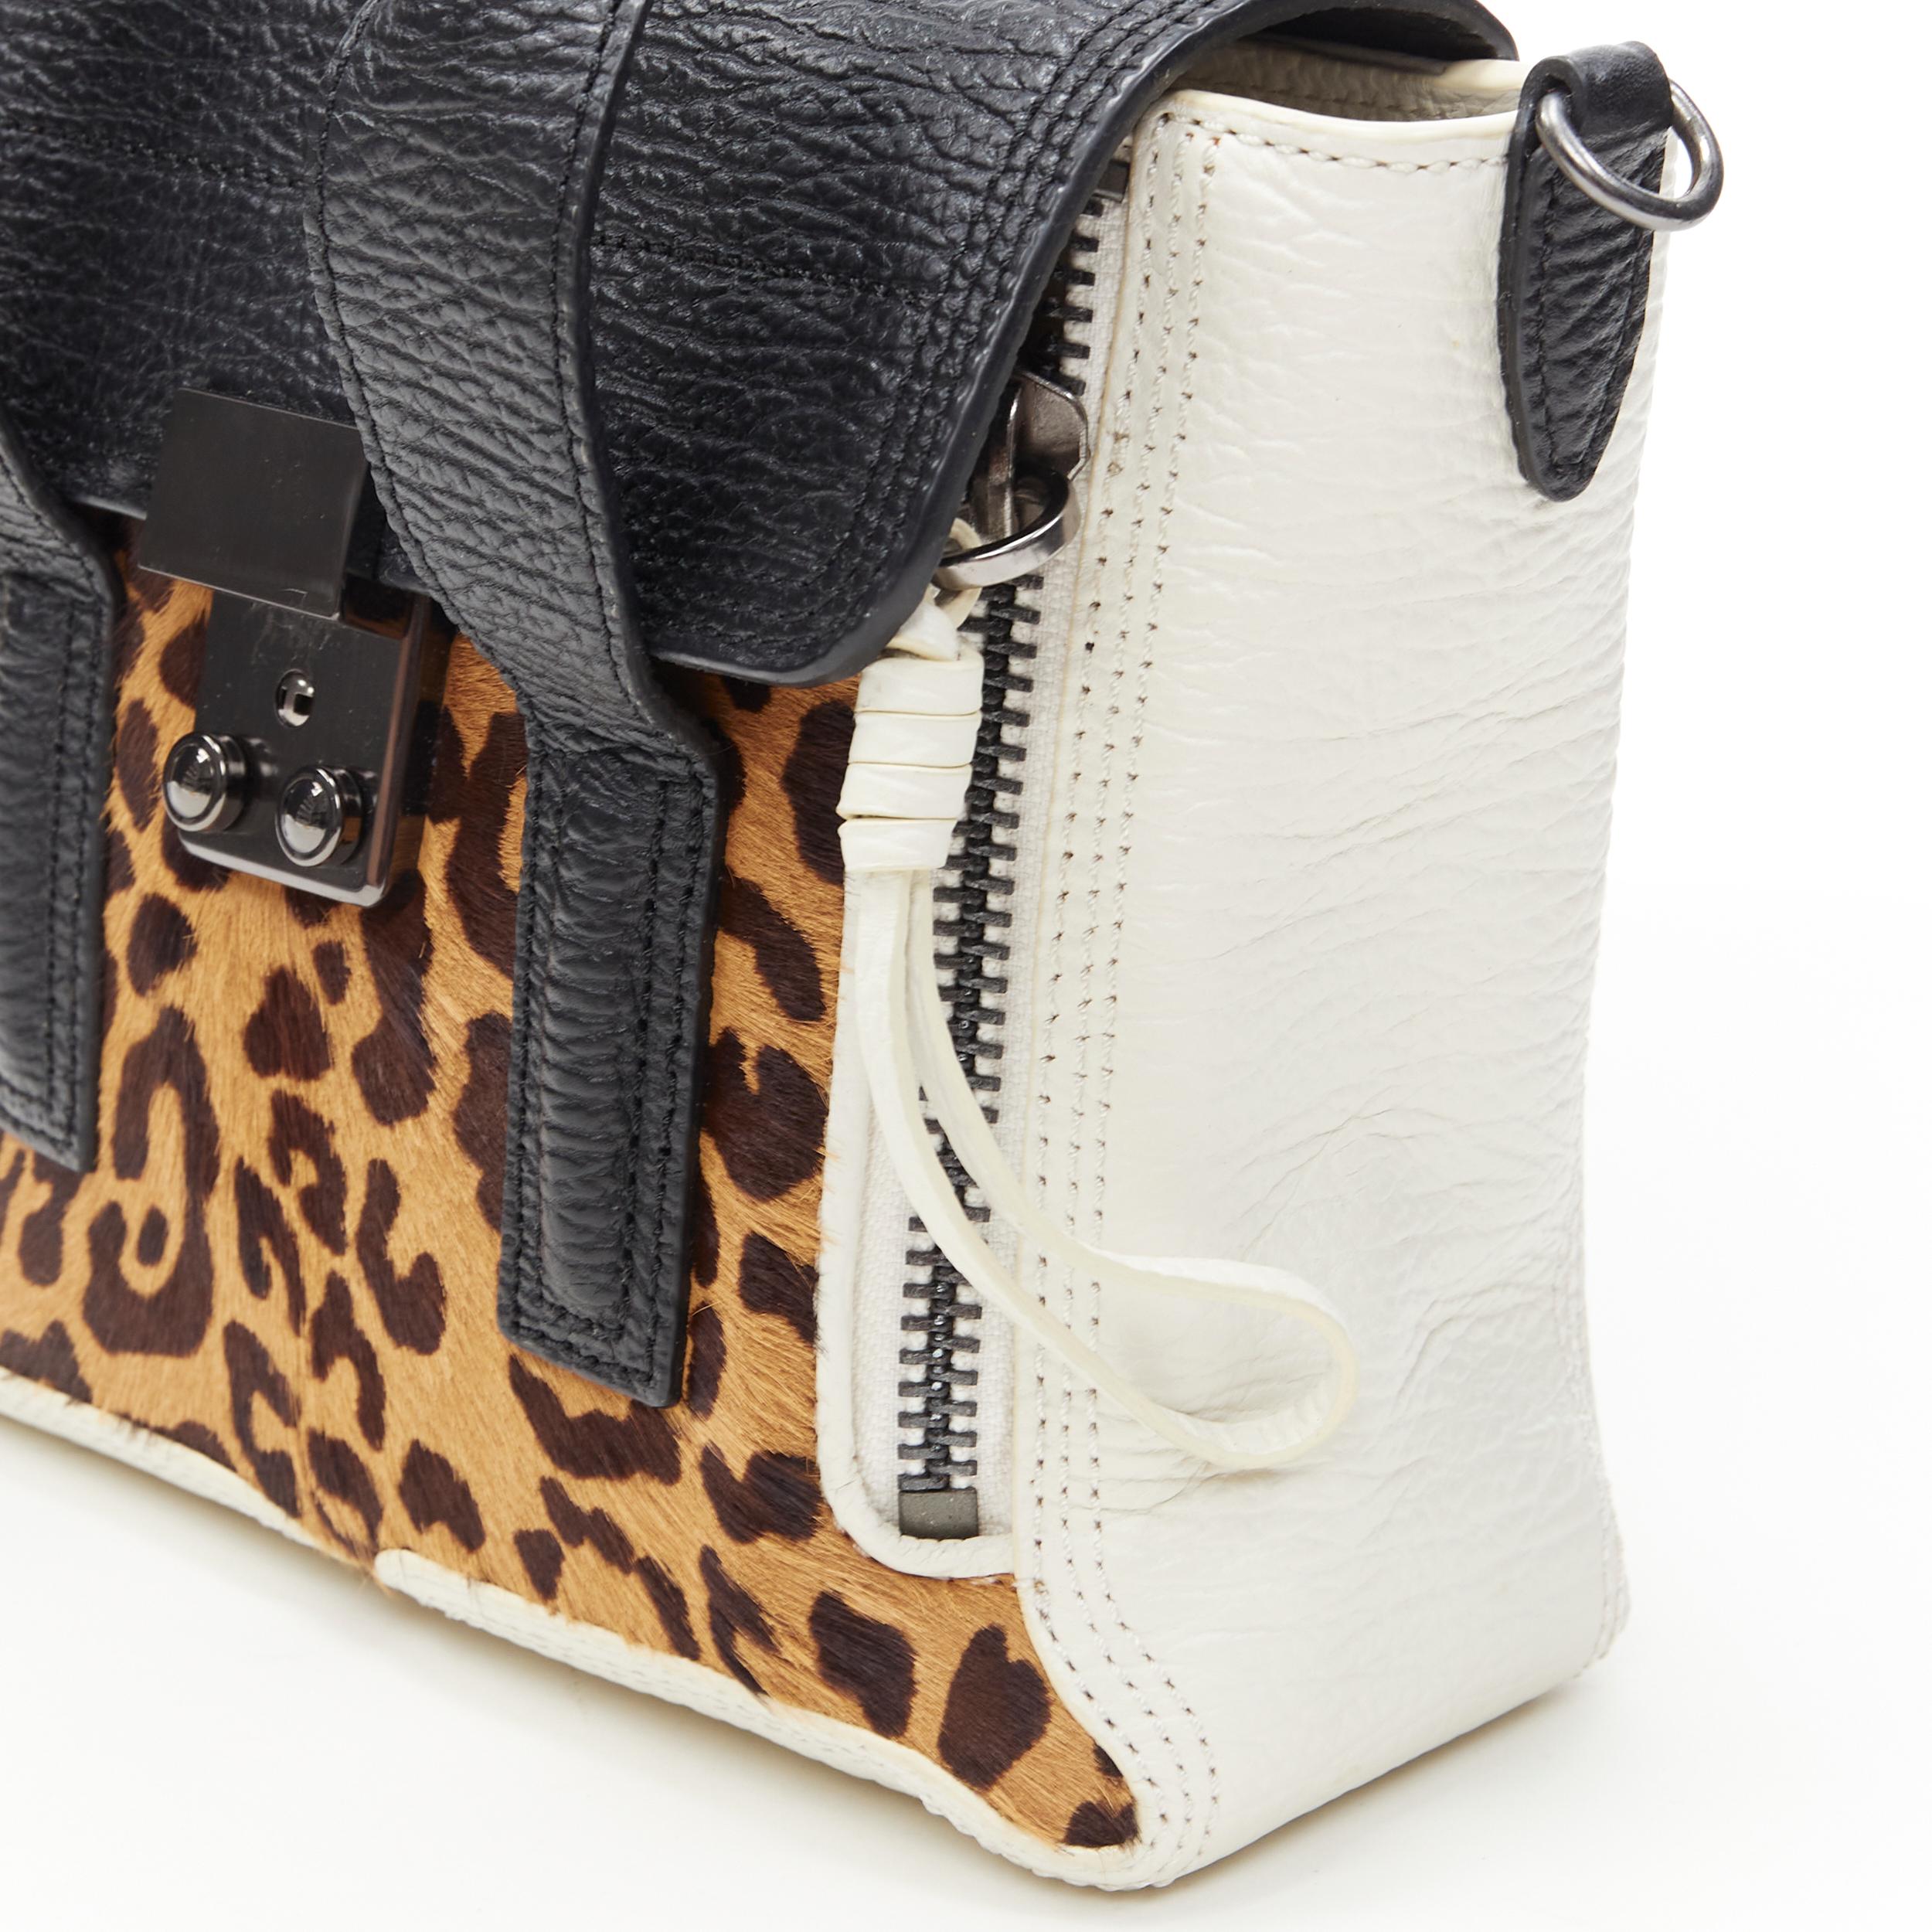 Women's 3.1 PHILLIP LIM Mini Pashli black white leopard leather crossbody satchel bag